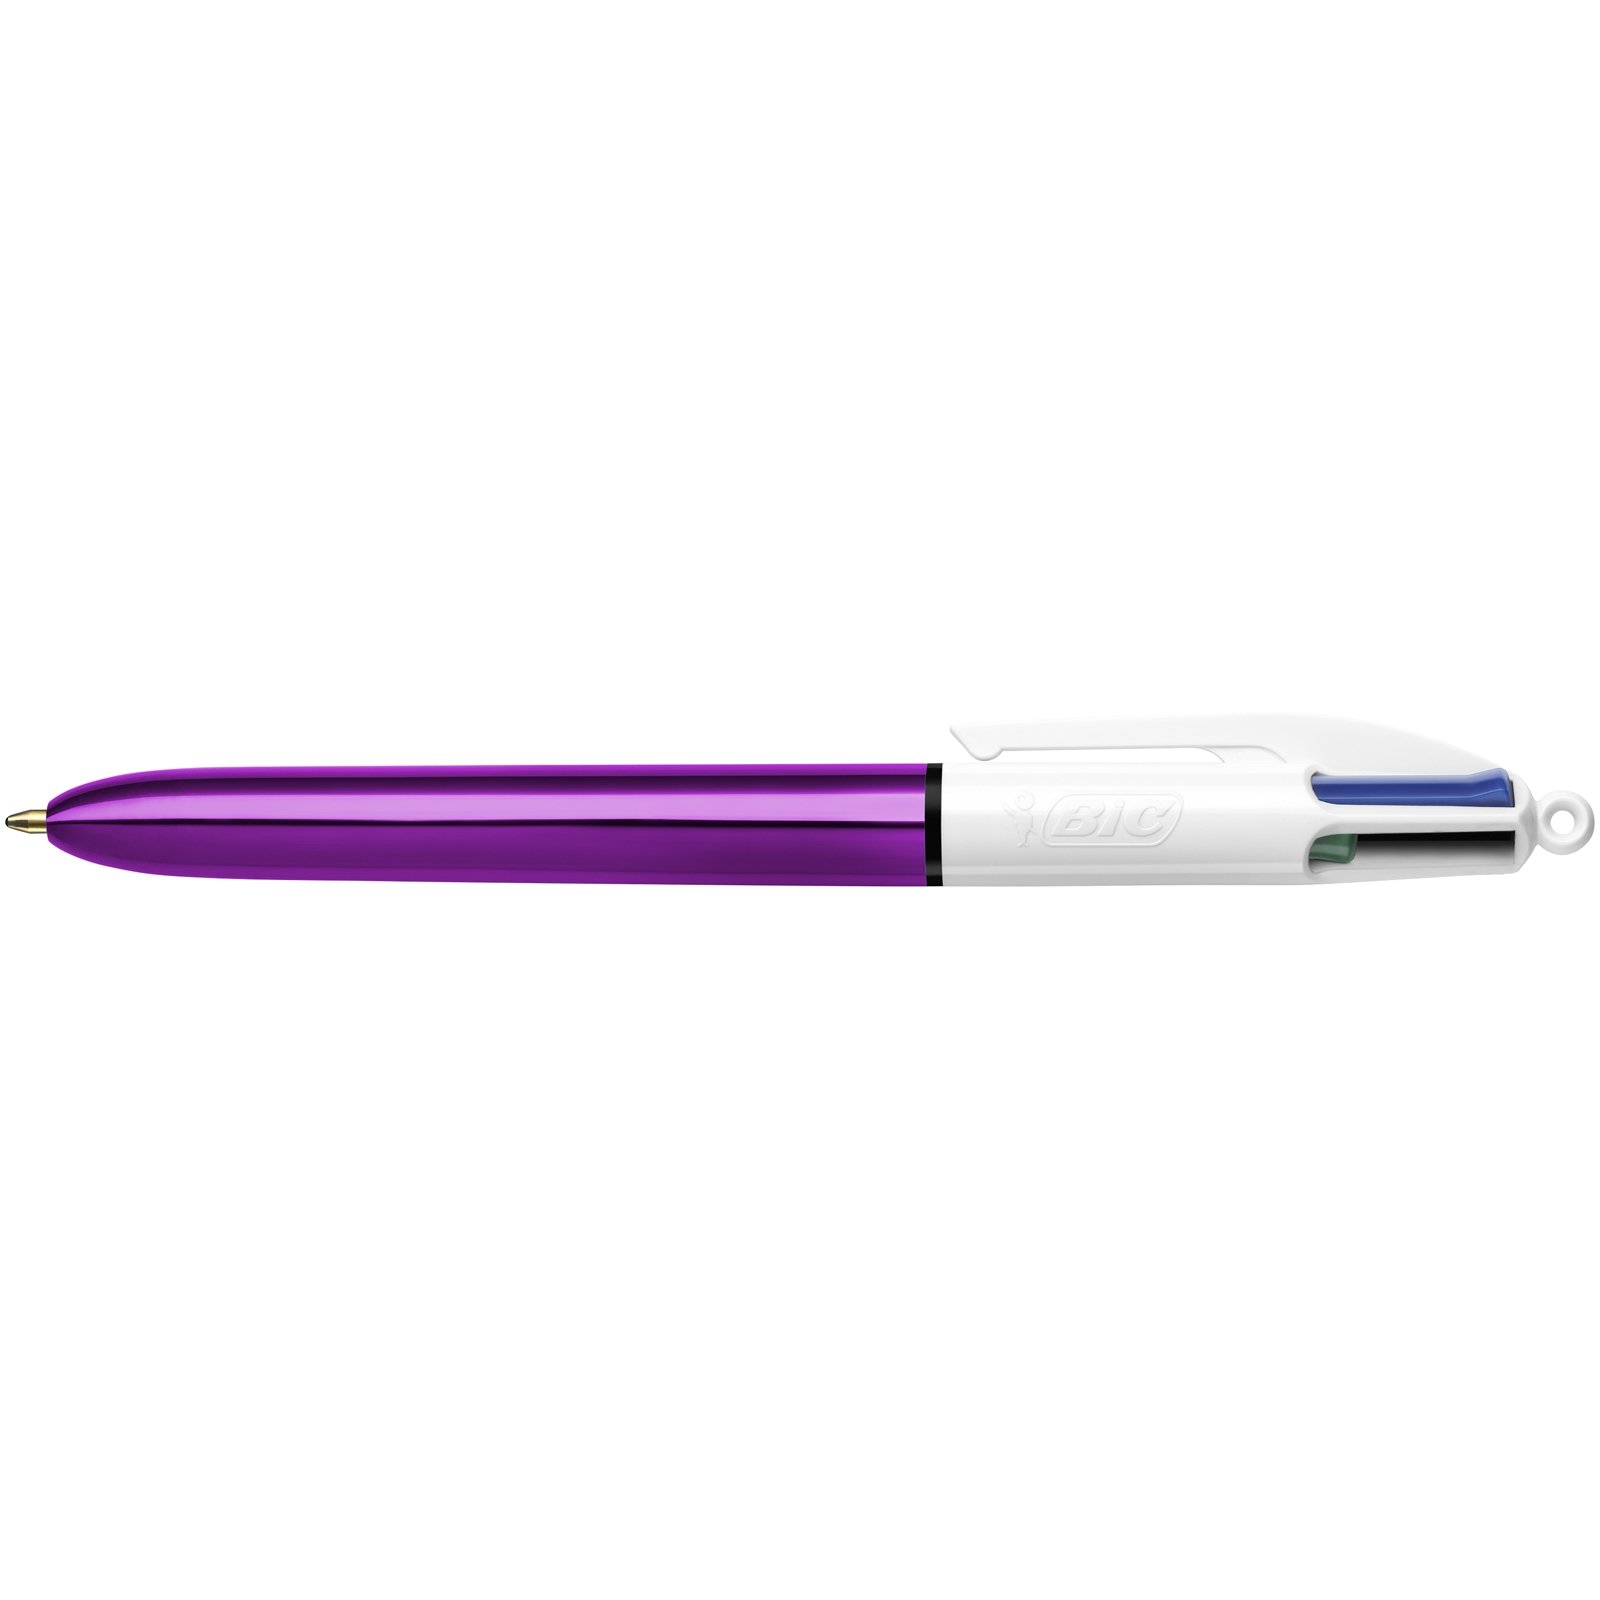 Ручка шариковая BIC 4 Colours Shine Purple, 1 мм, 4 цвета, 1 шт. (951351) - фото 2